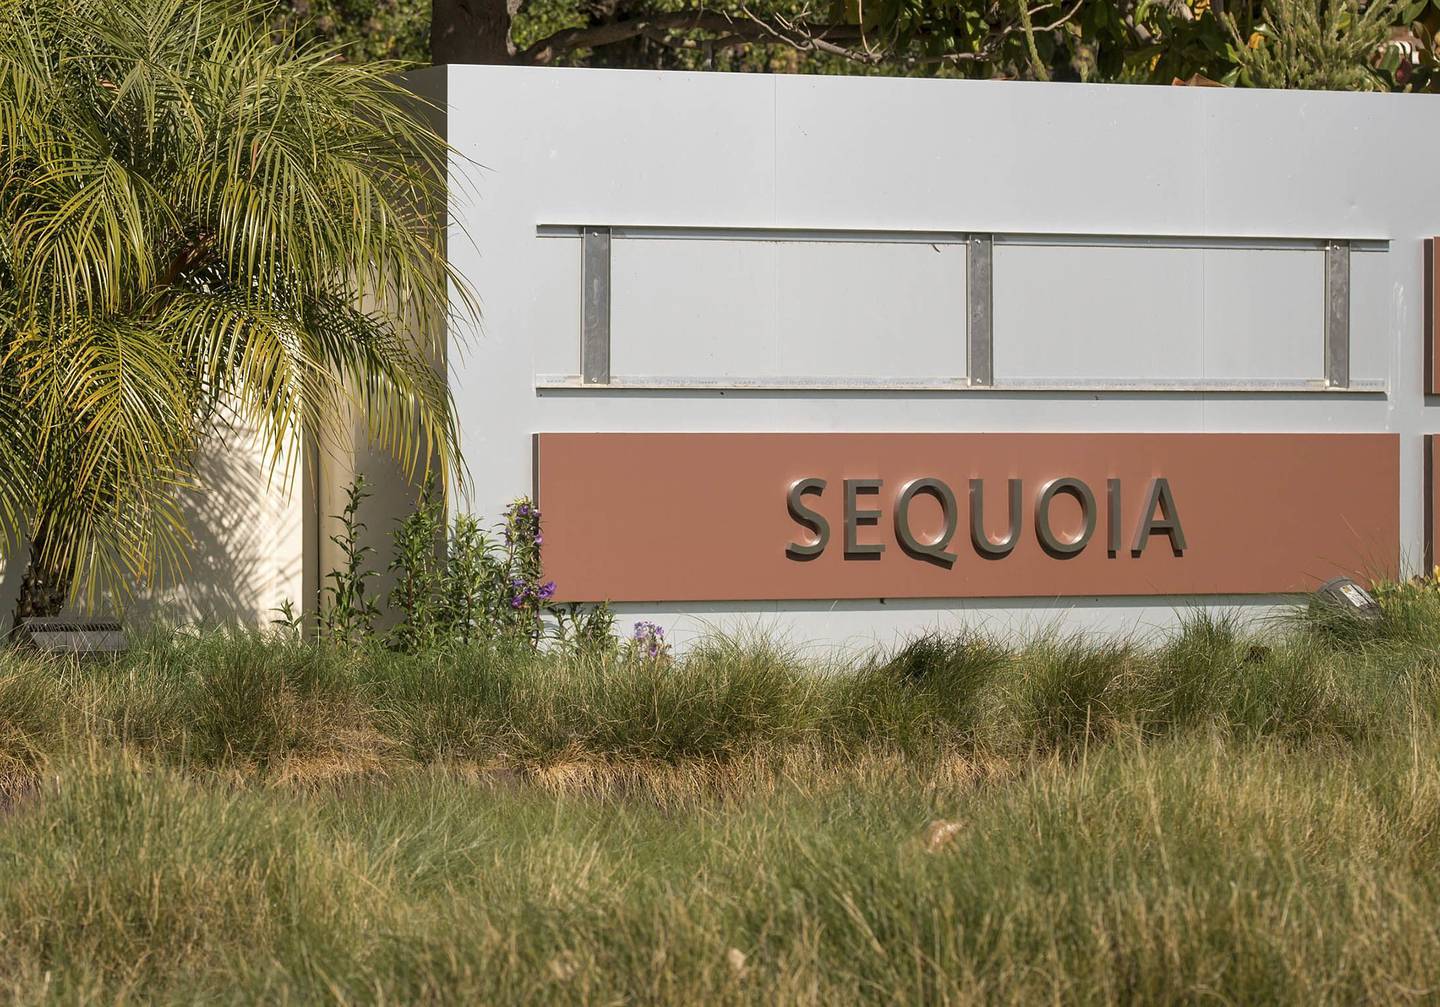 Offices for Sequoia Capital in Menlo Park, California.